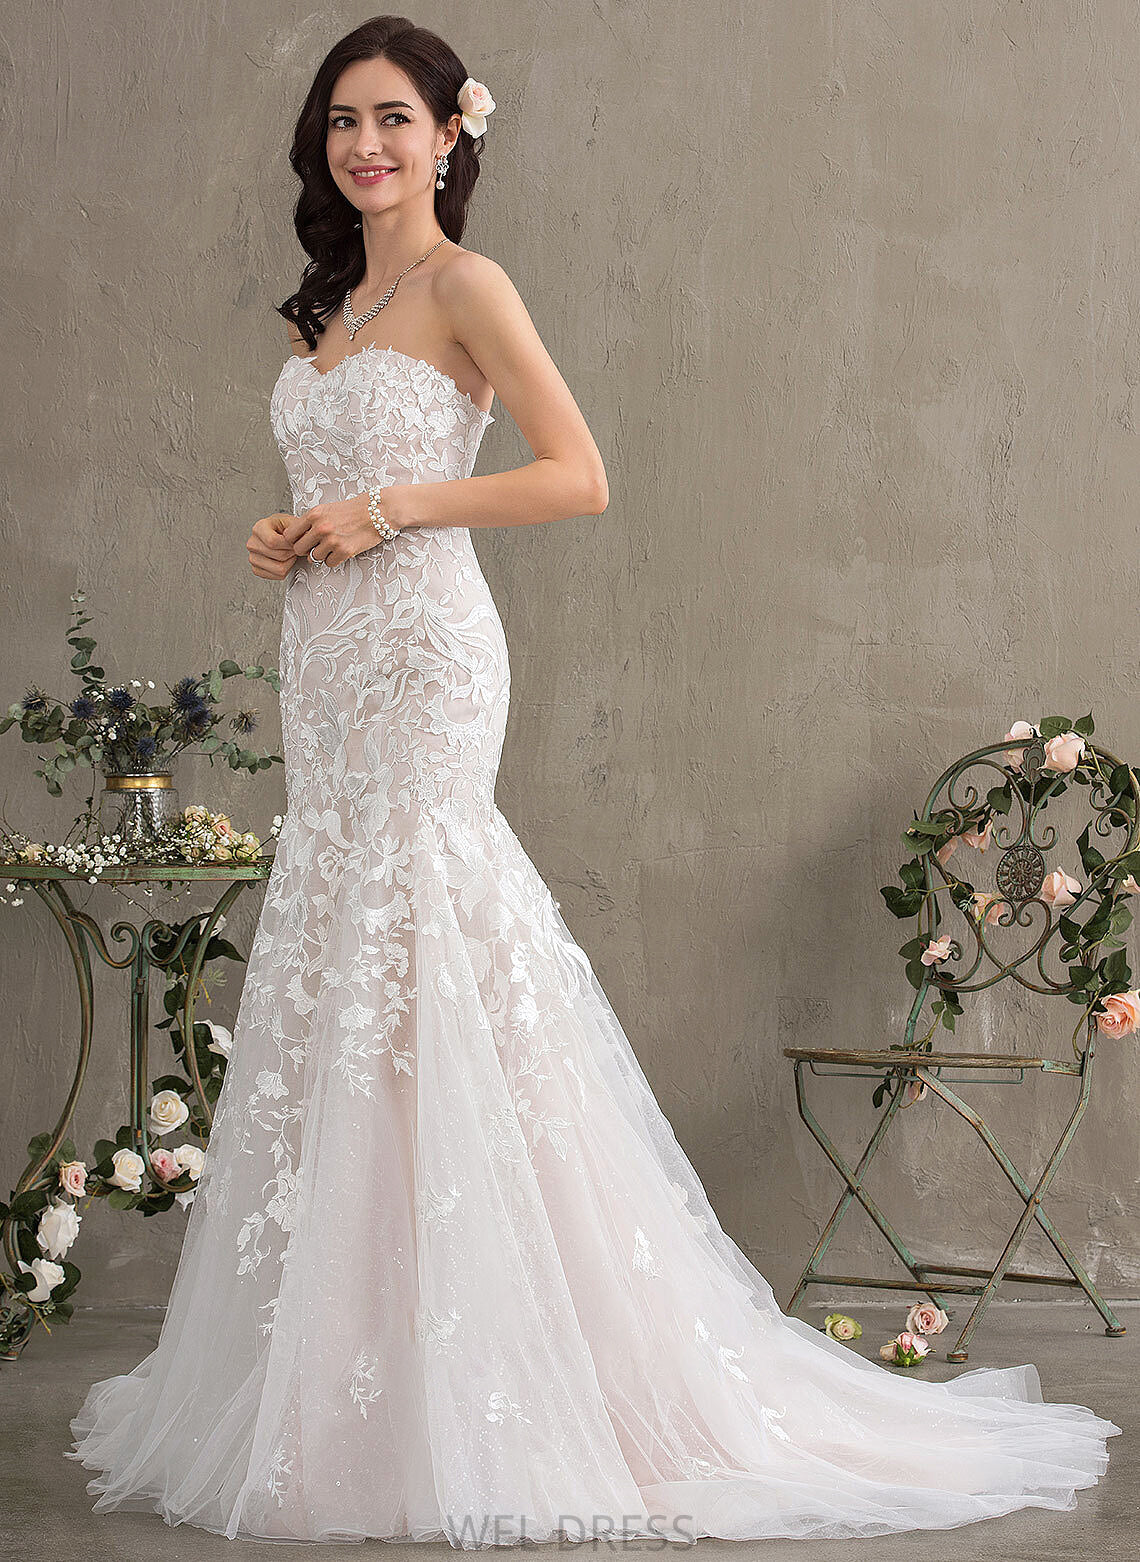 Haleigh Wedding Dress Lace Sweetheart Trumpet/Mermaid Wedding Dresses Train Tulle Court